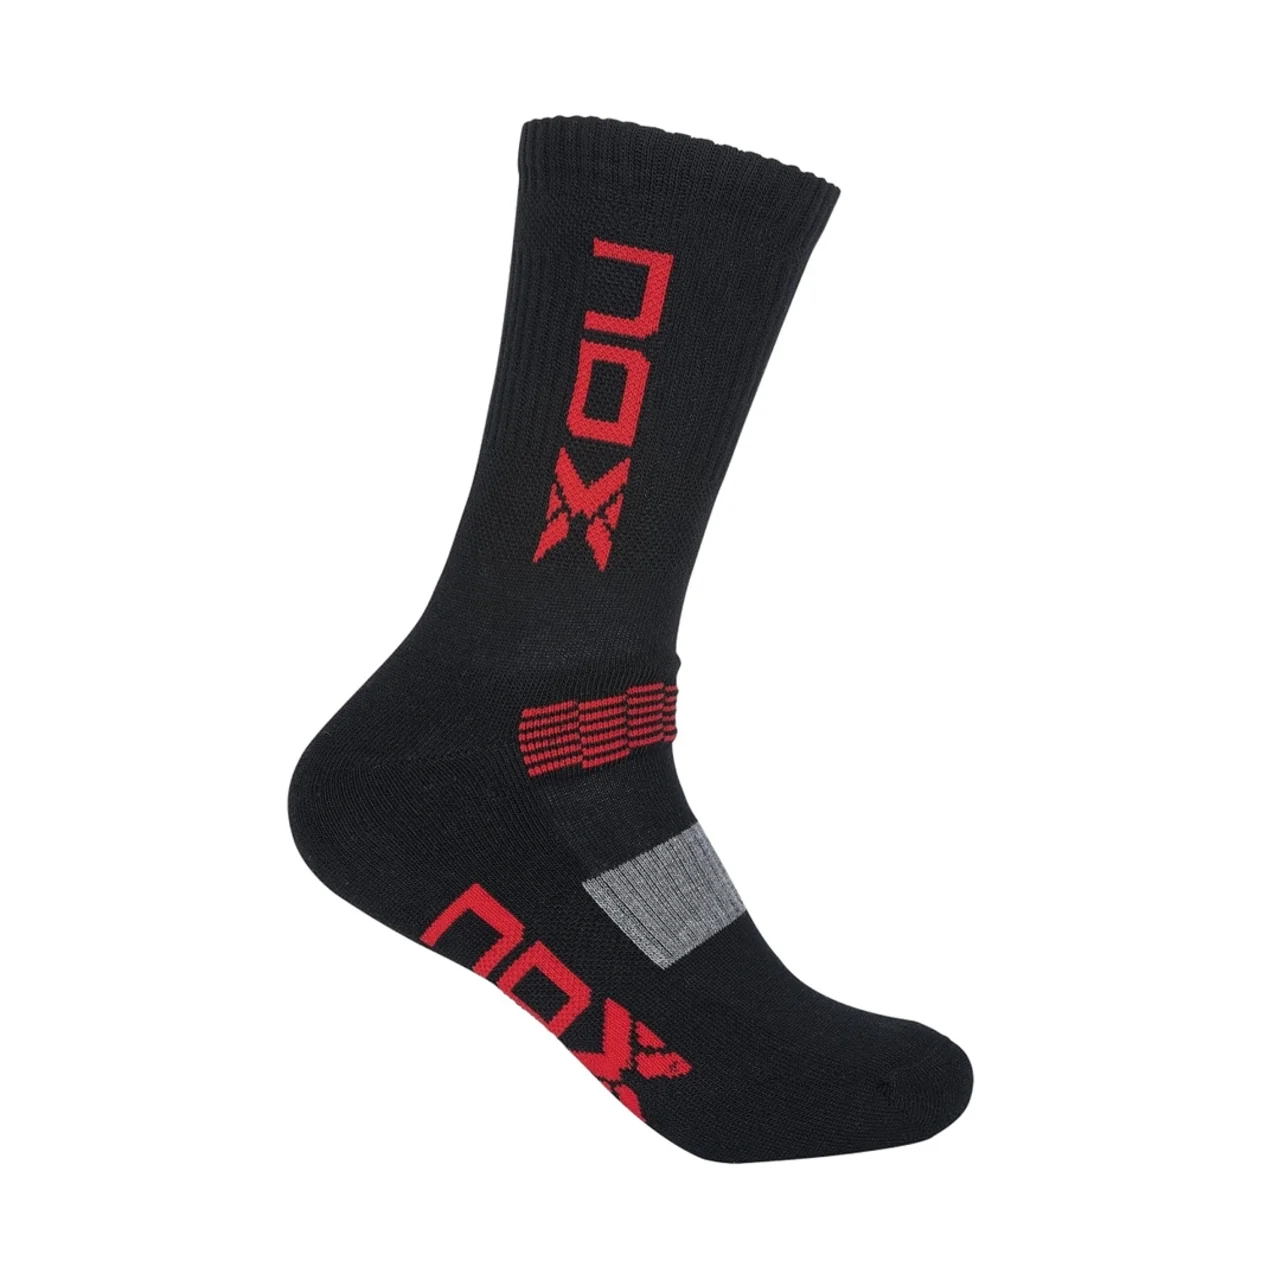 Nox Technical socks 1PK Black/Red